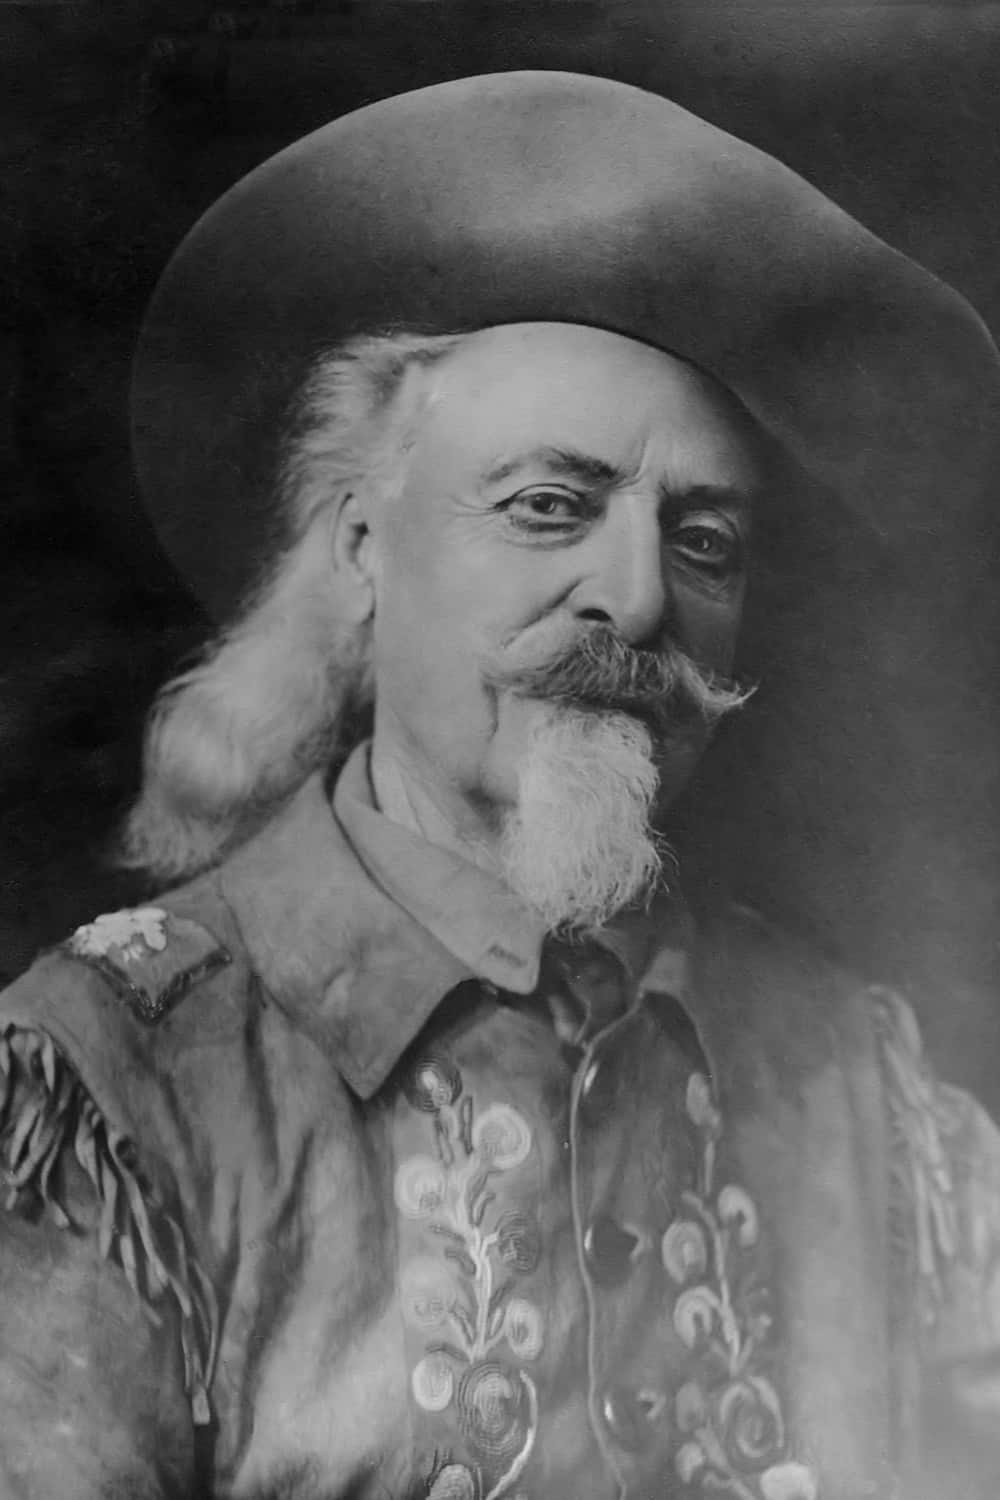 Buffalo Bill – 1846 to 1917